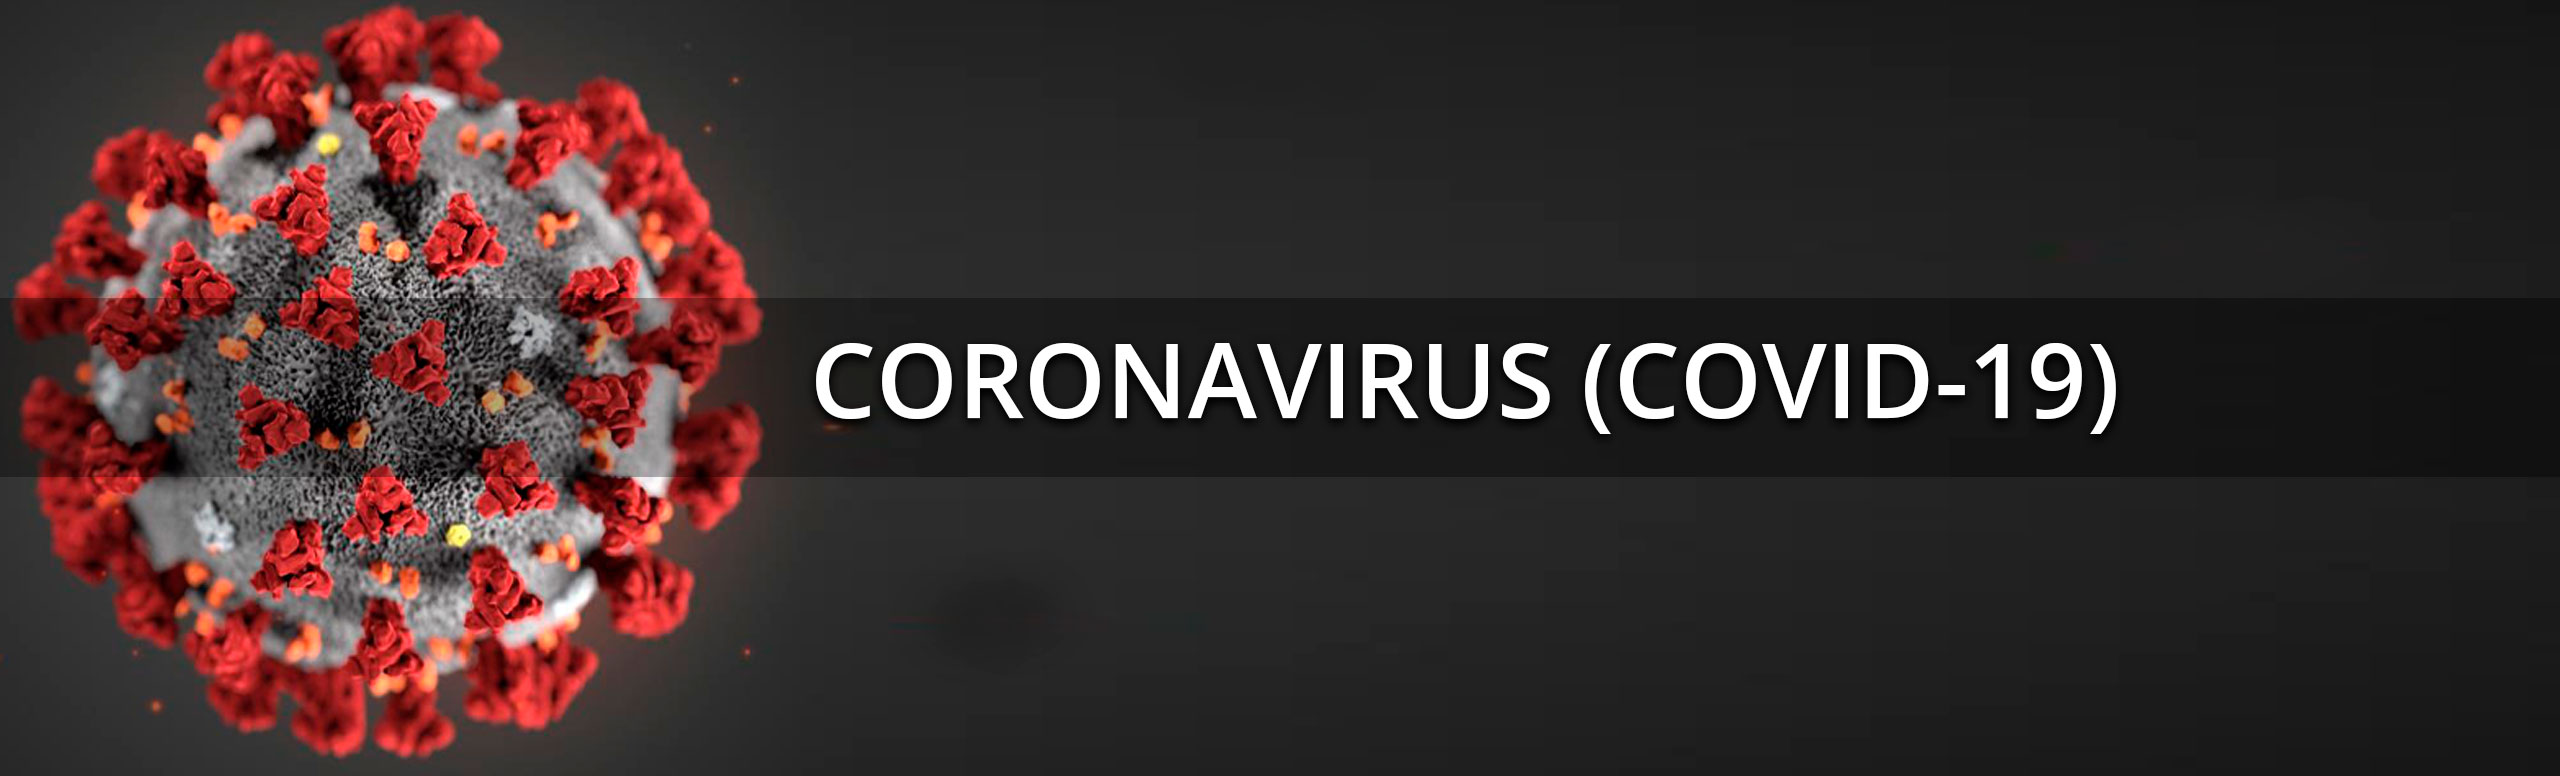 Banner picture of the virus. Banner says:
Coronavirus